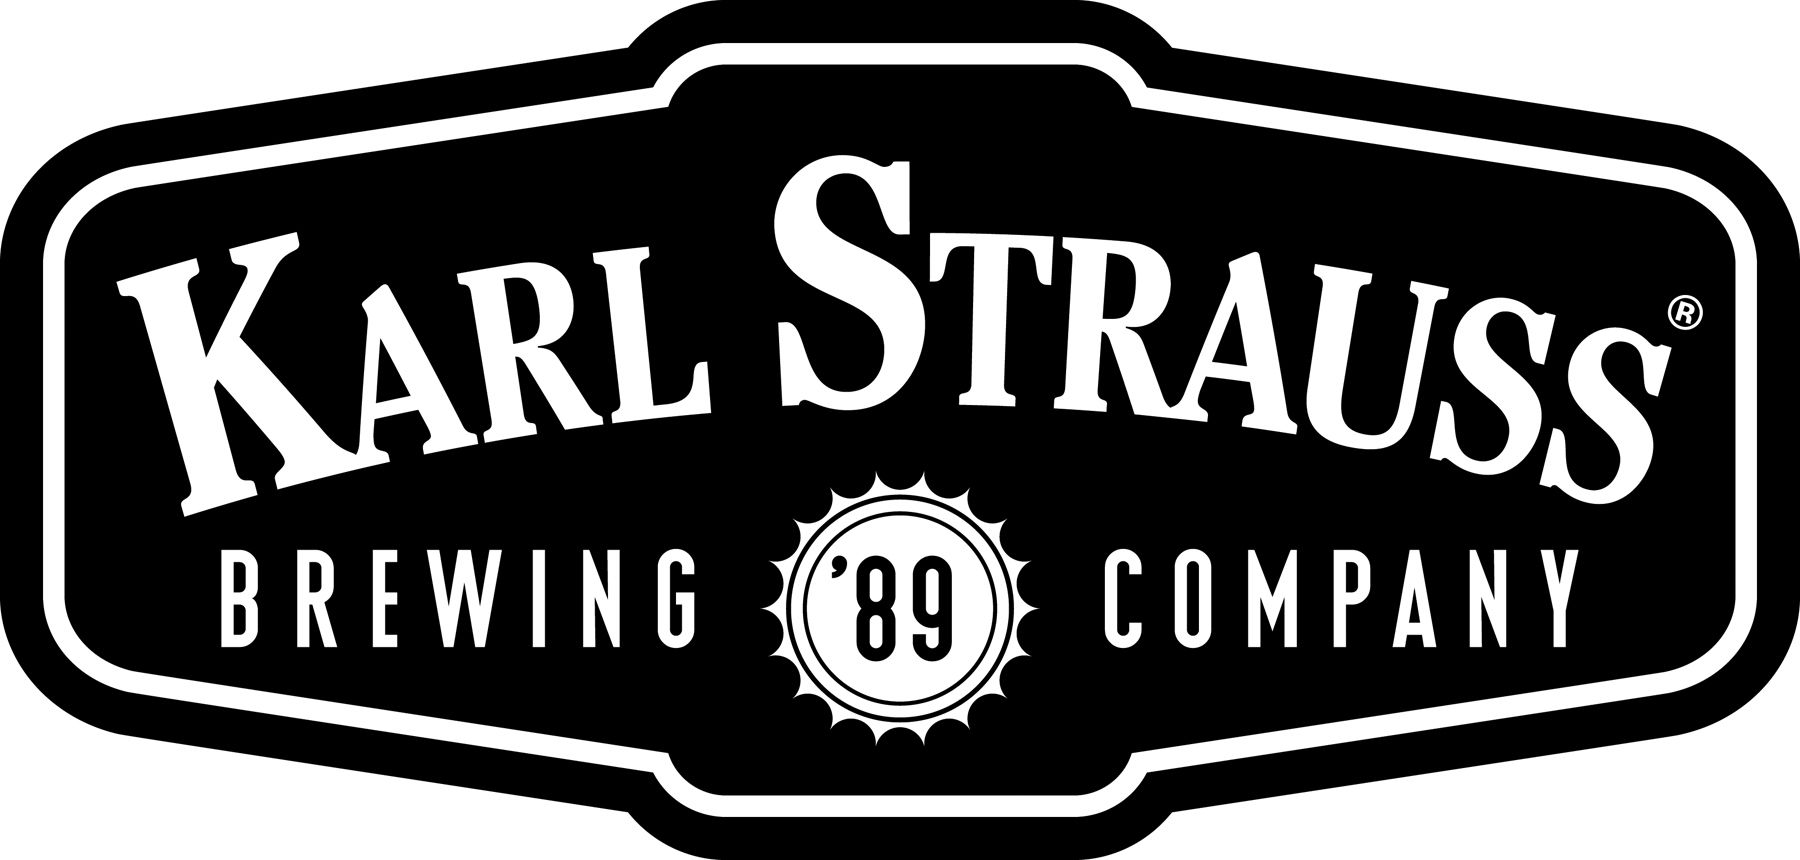 Karl Strauss Brewing Company jobs